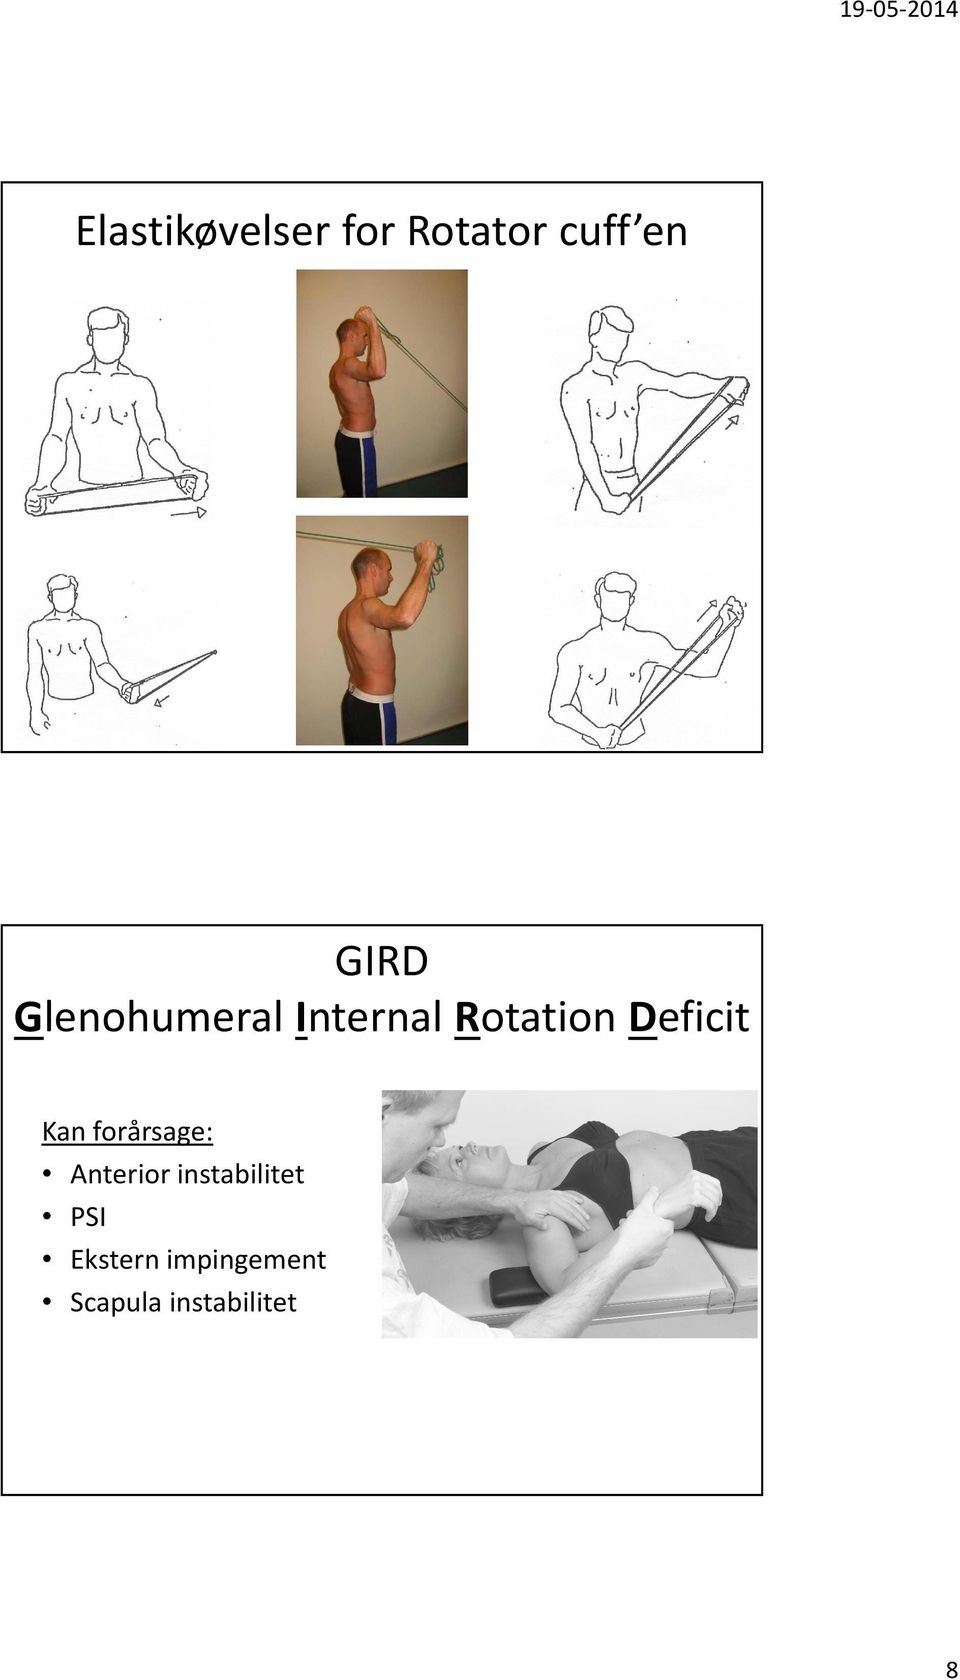 Rheinlænder, Fysioterapeut GIRD Glenohumeral Internal Rotation